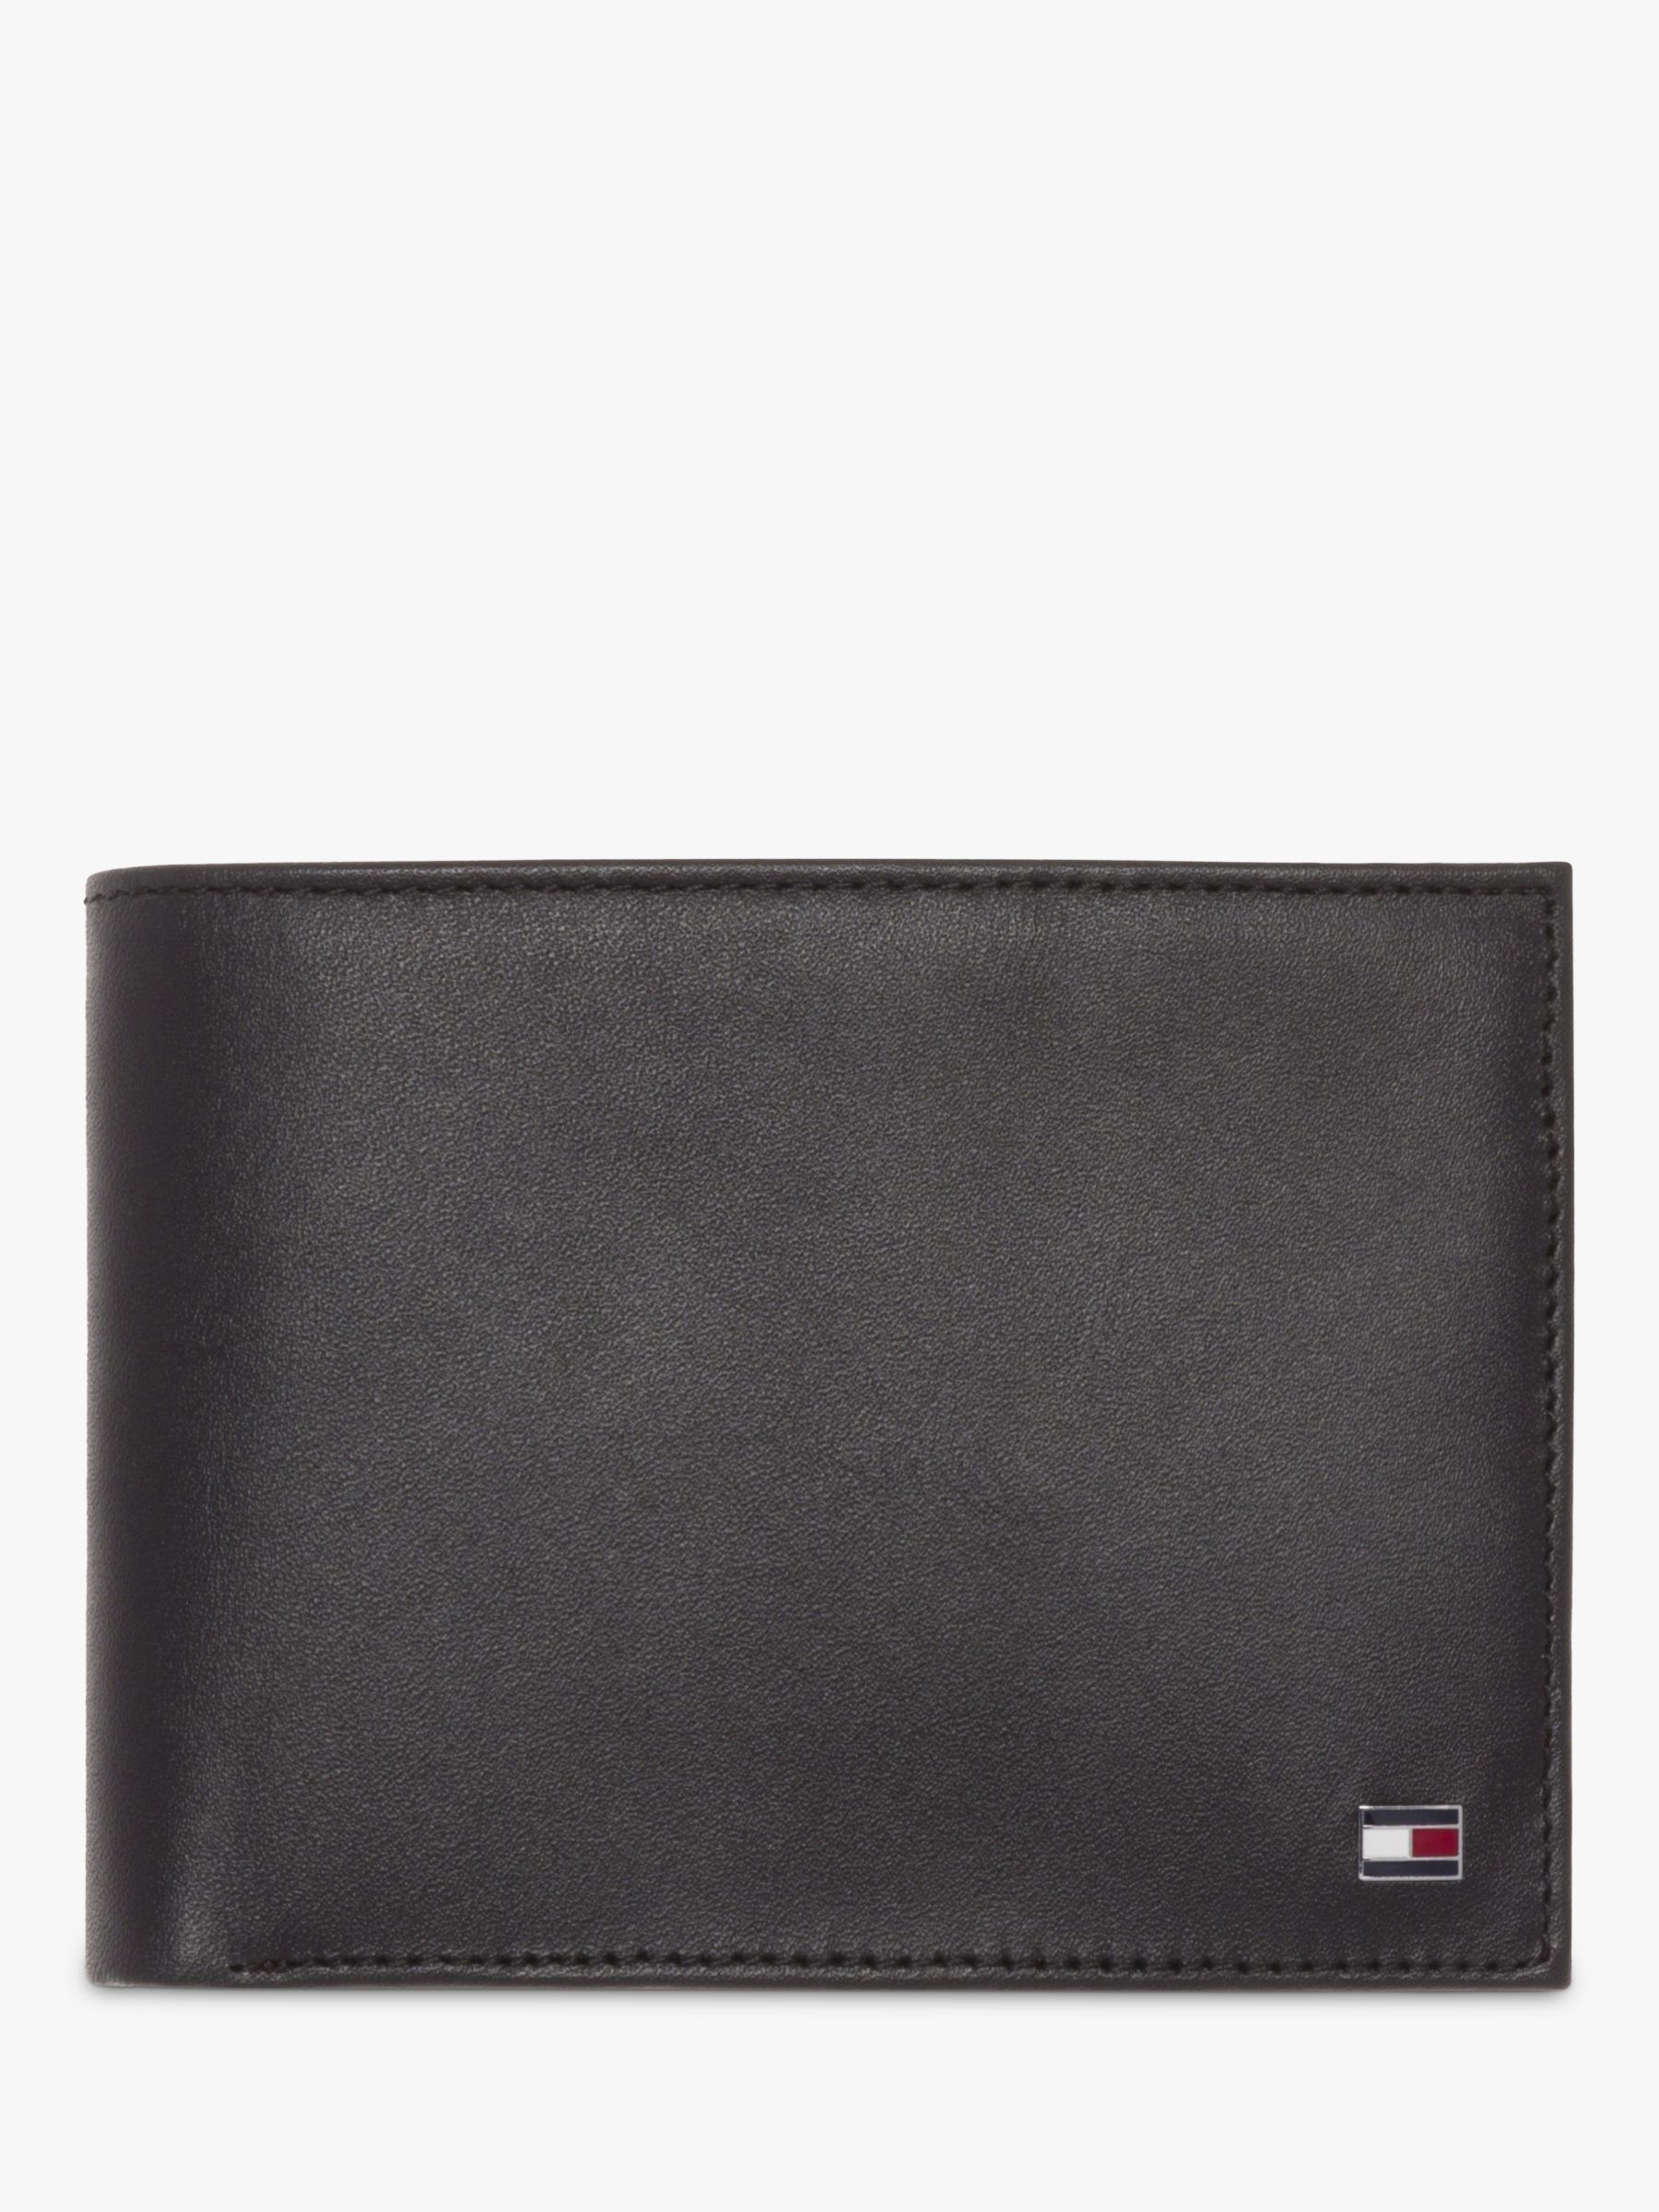 Tommy Hilfiger Eton Leather Coin Wallet, Black